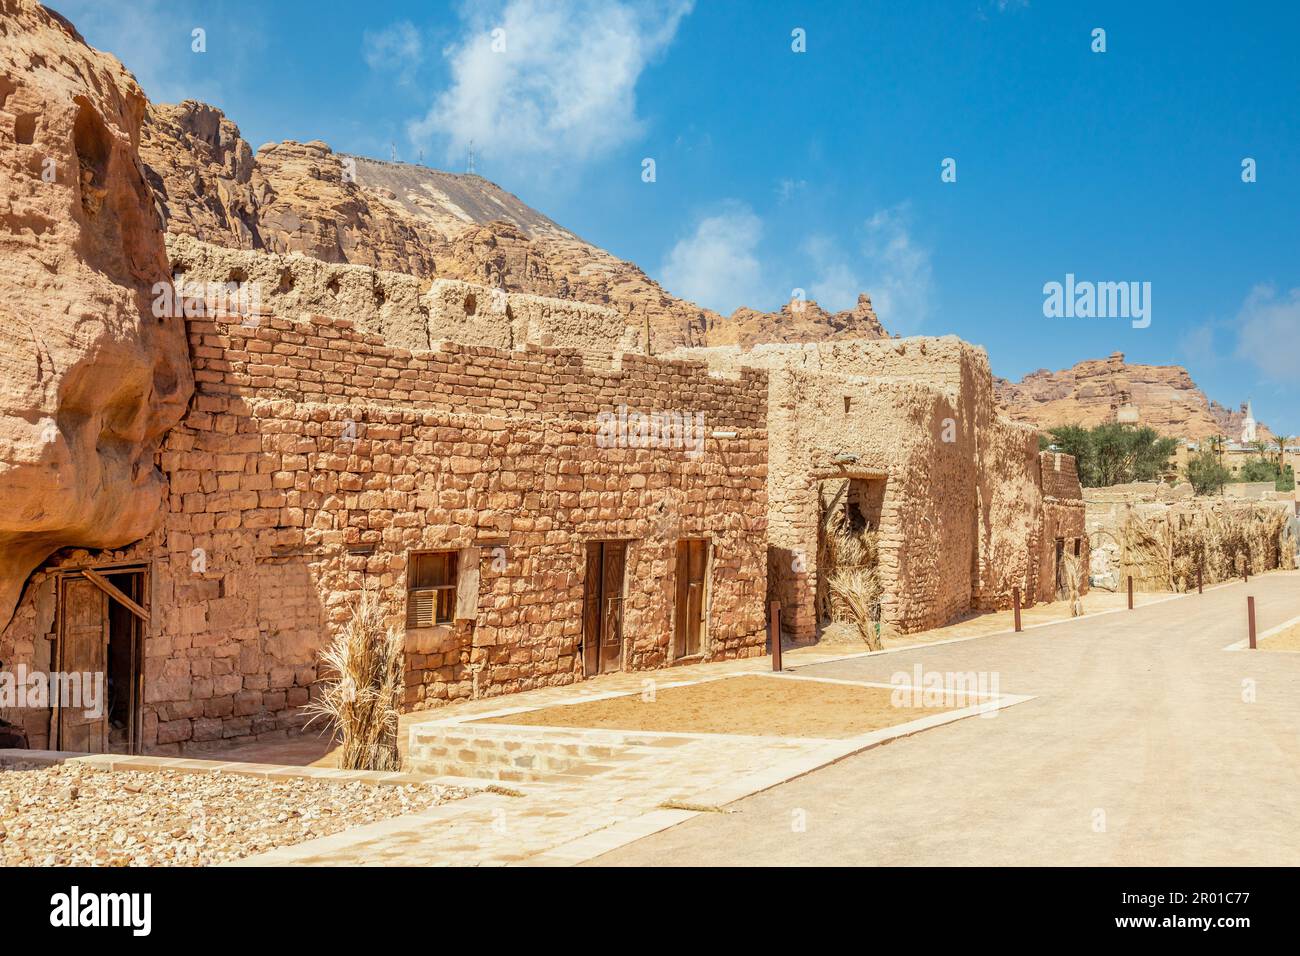 Al Ula old town street with ruined mud huts, Medina province, Saudi Arabia Stock Photo